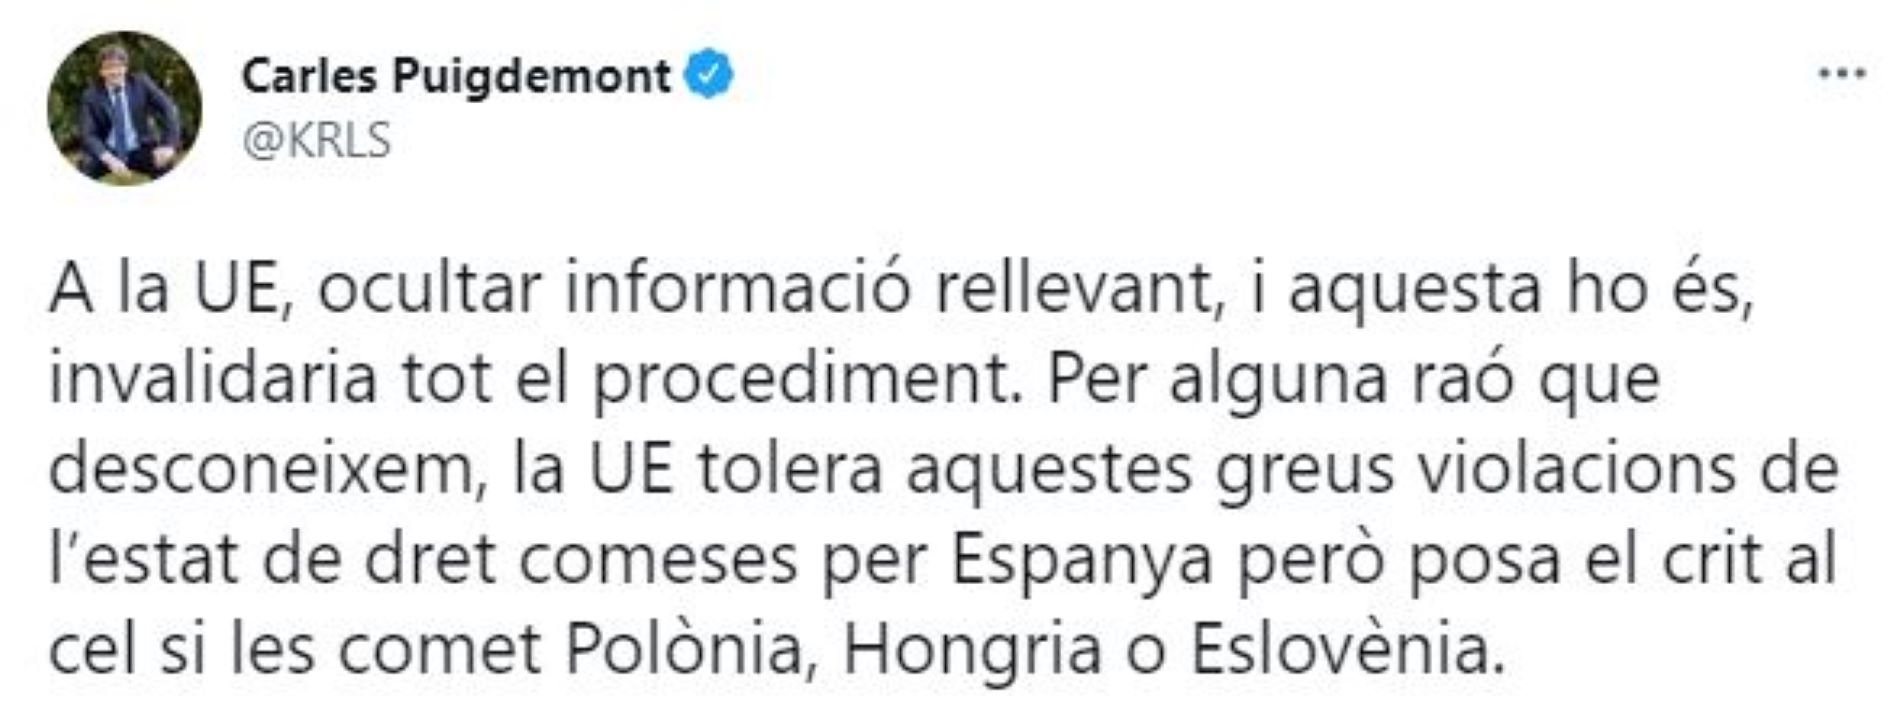 TUIT Carles Puigdemont tribunal cuentas